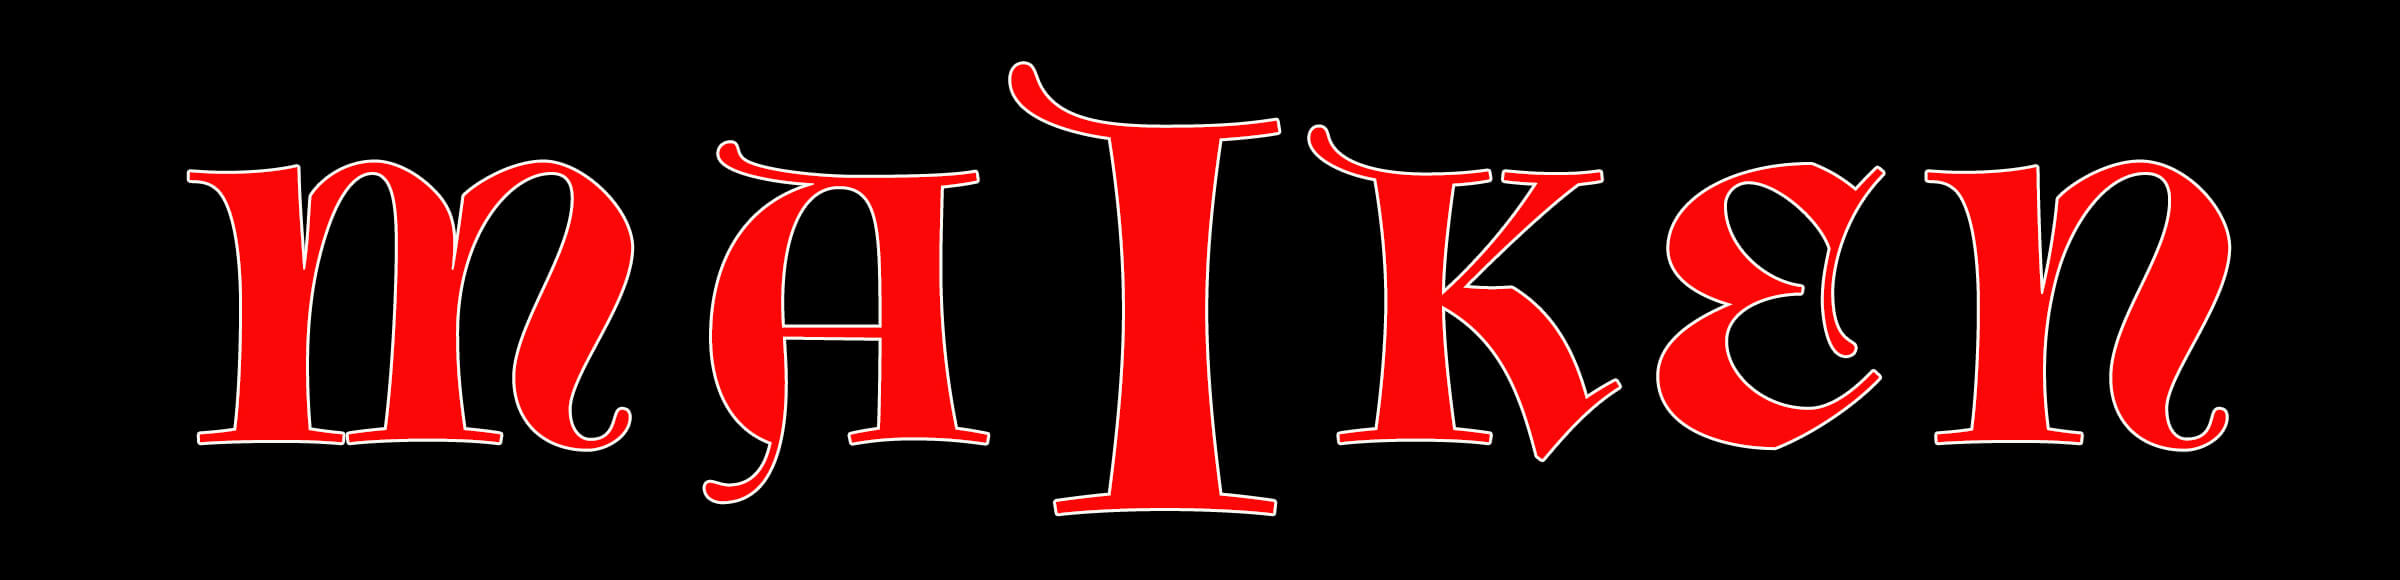 Maiken logo large